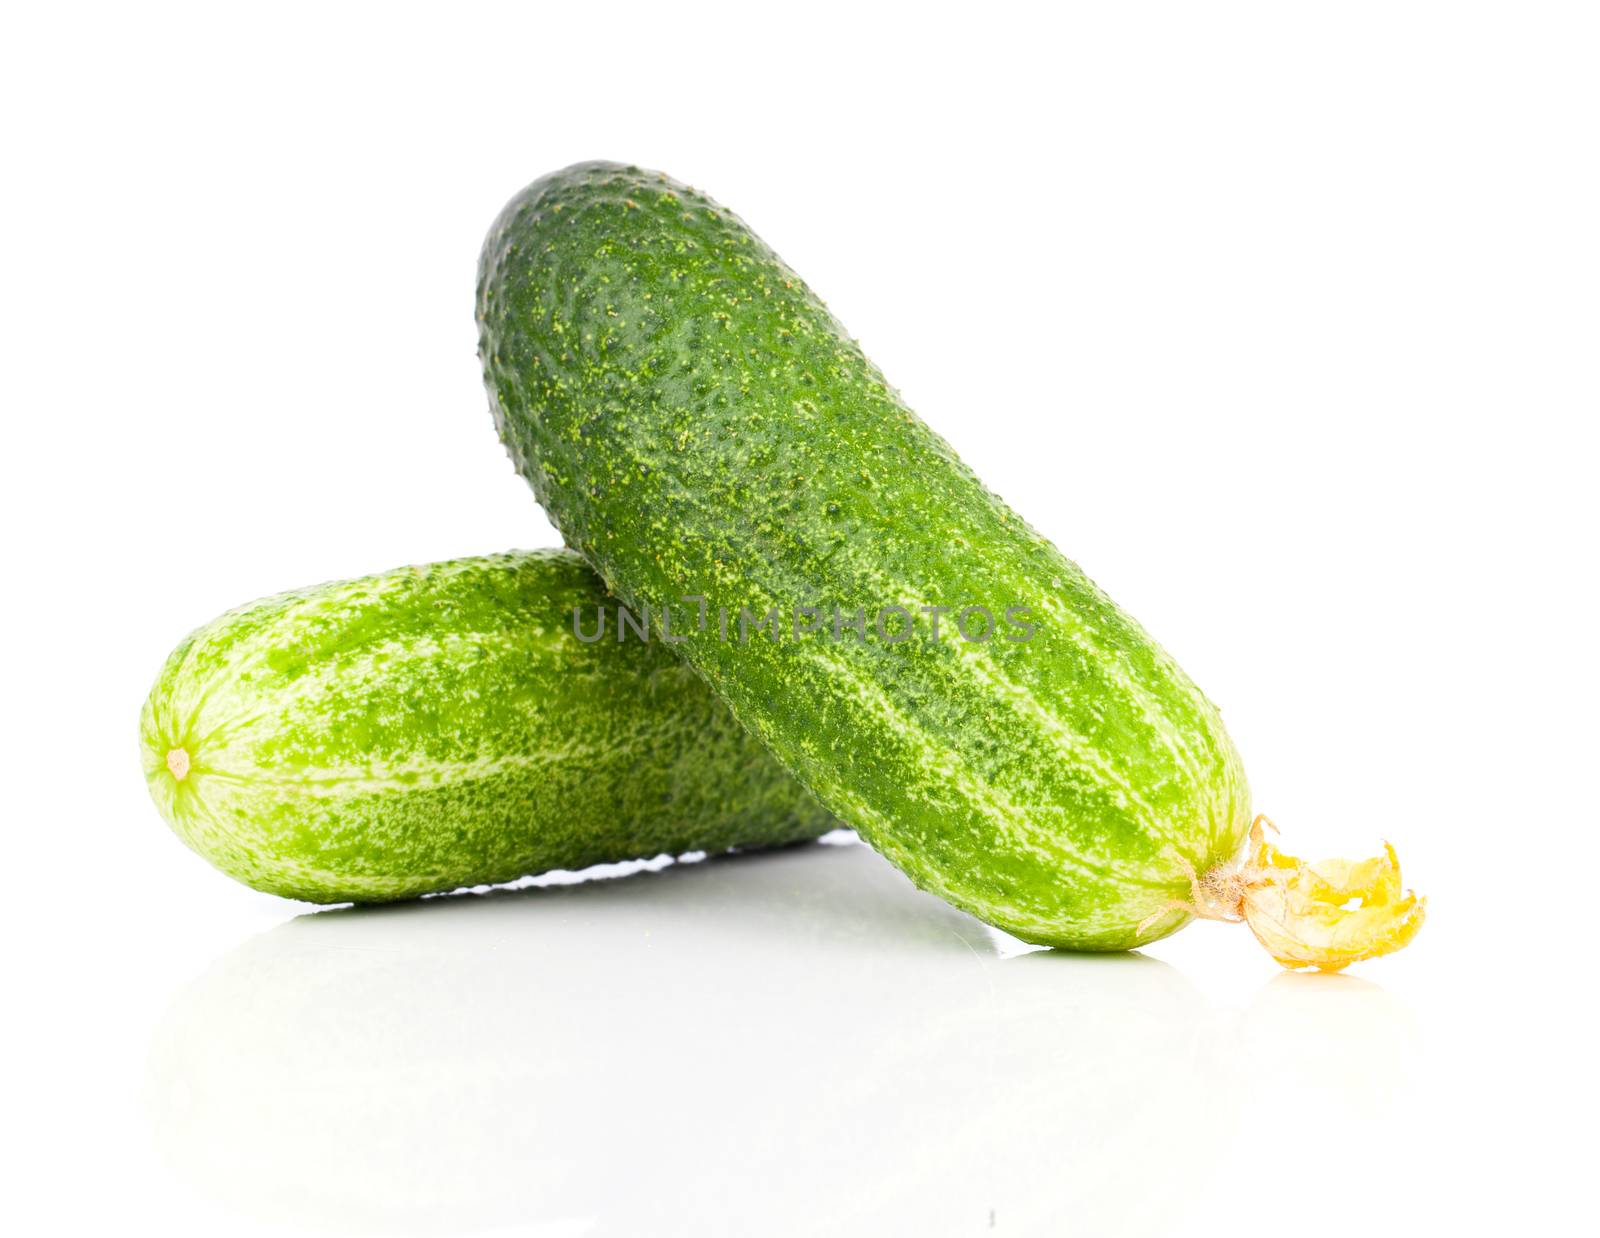 Cucumber isolated on white background by motorolka